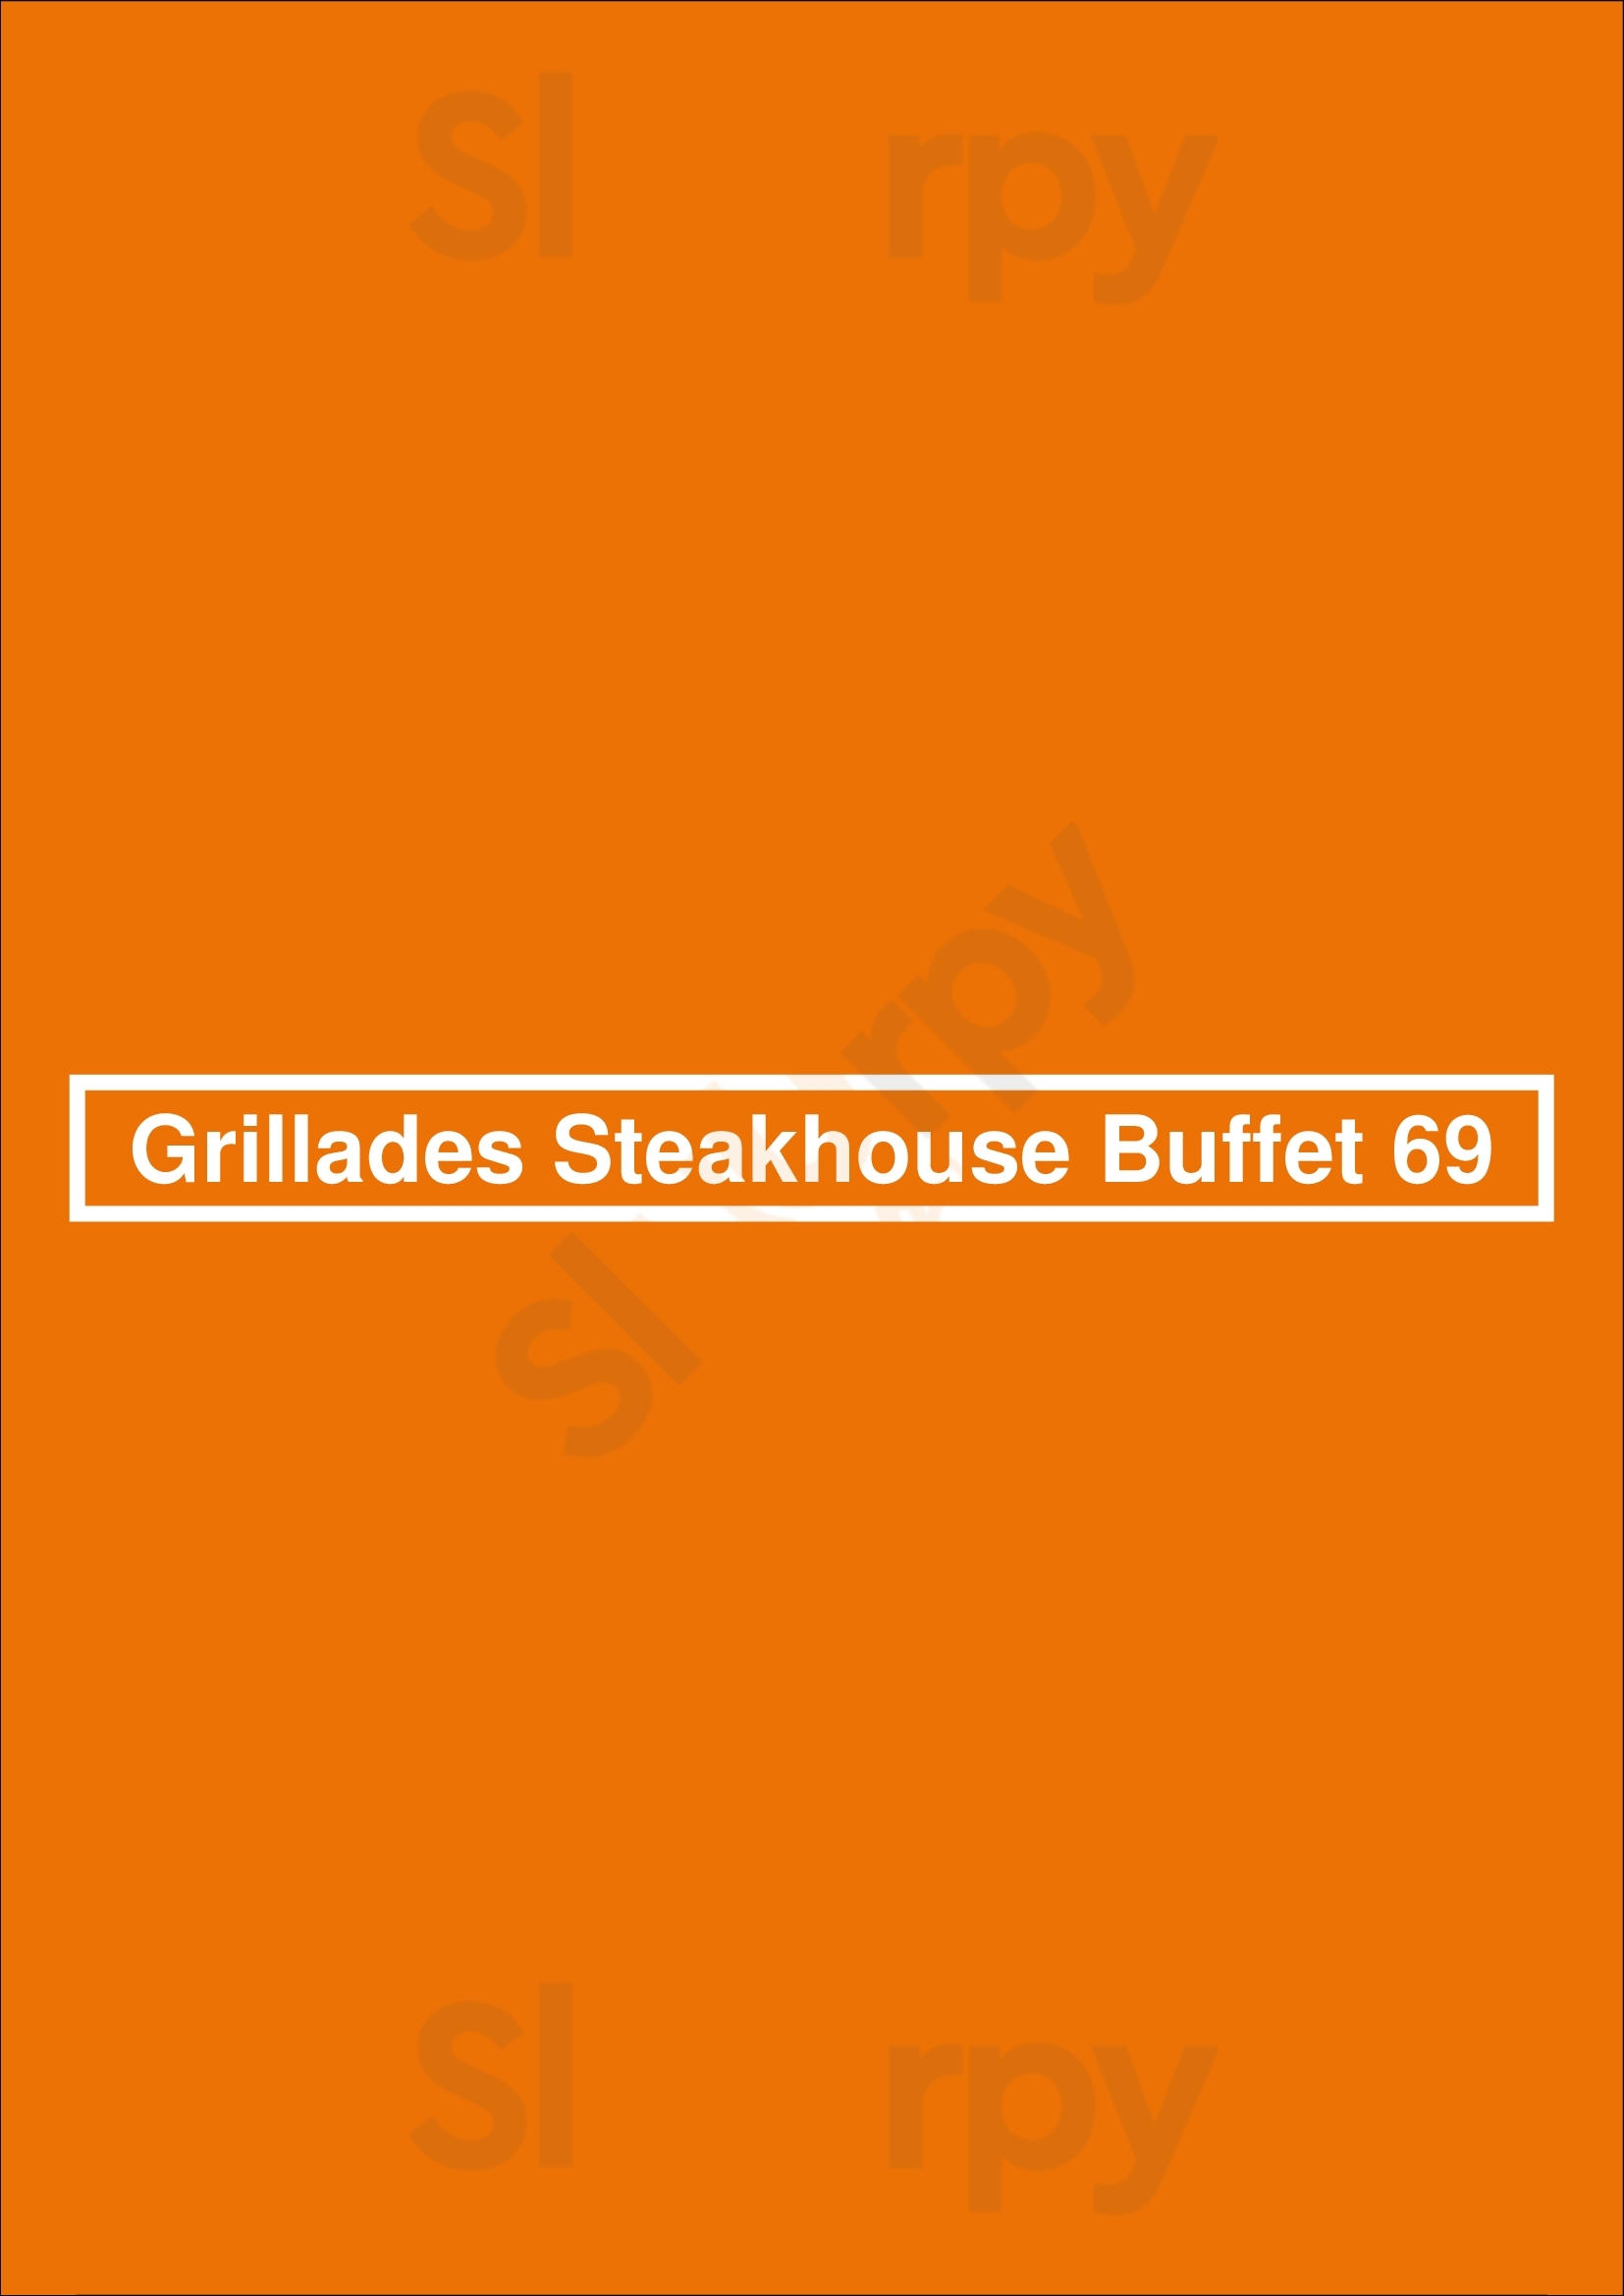 Grillades Steakhouse Buffet 69 Saint-Priest Menu - 1